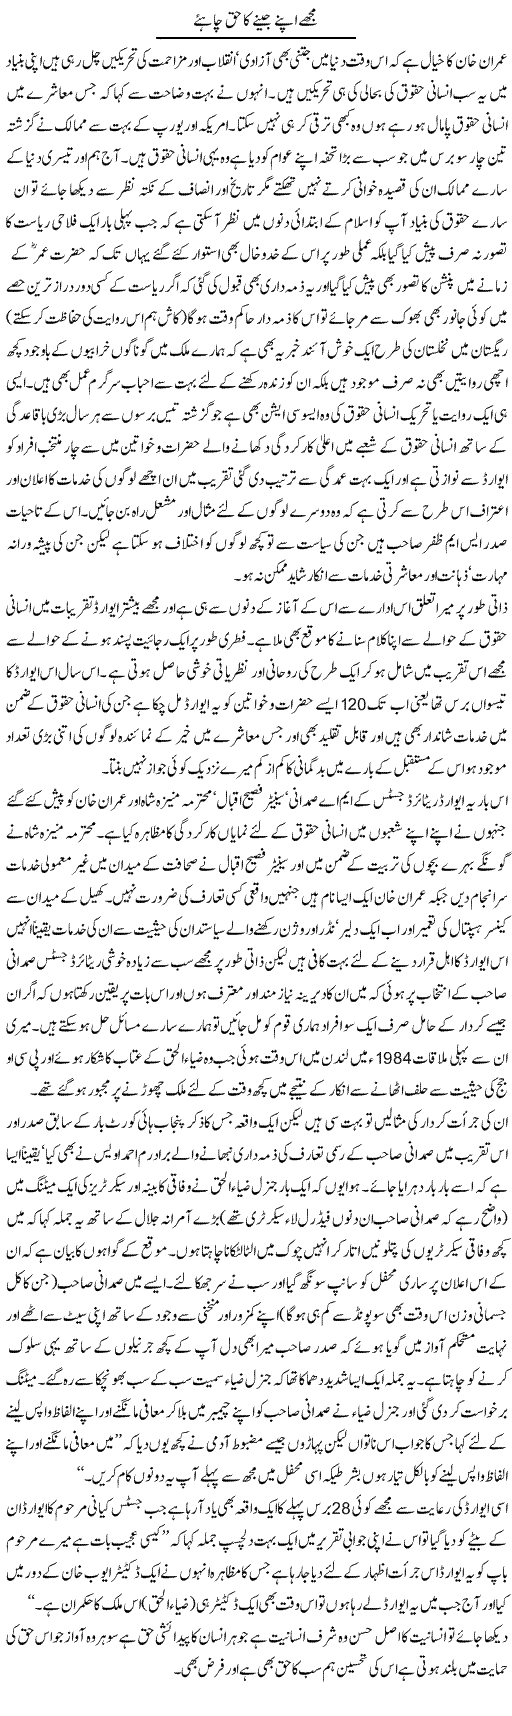 Imran Khan Express Column Amjad Islam 4 March 2011